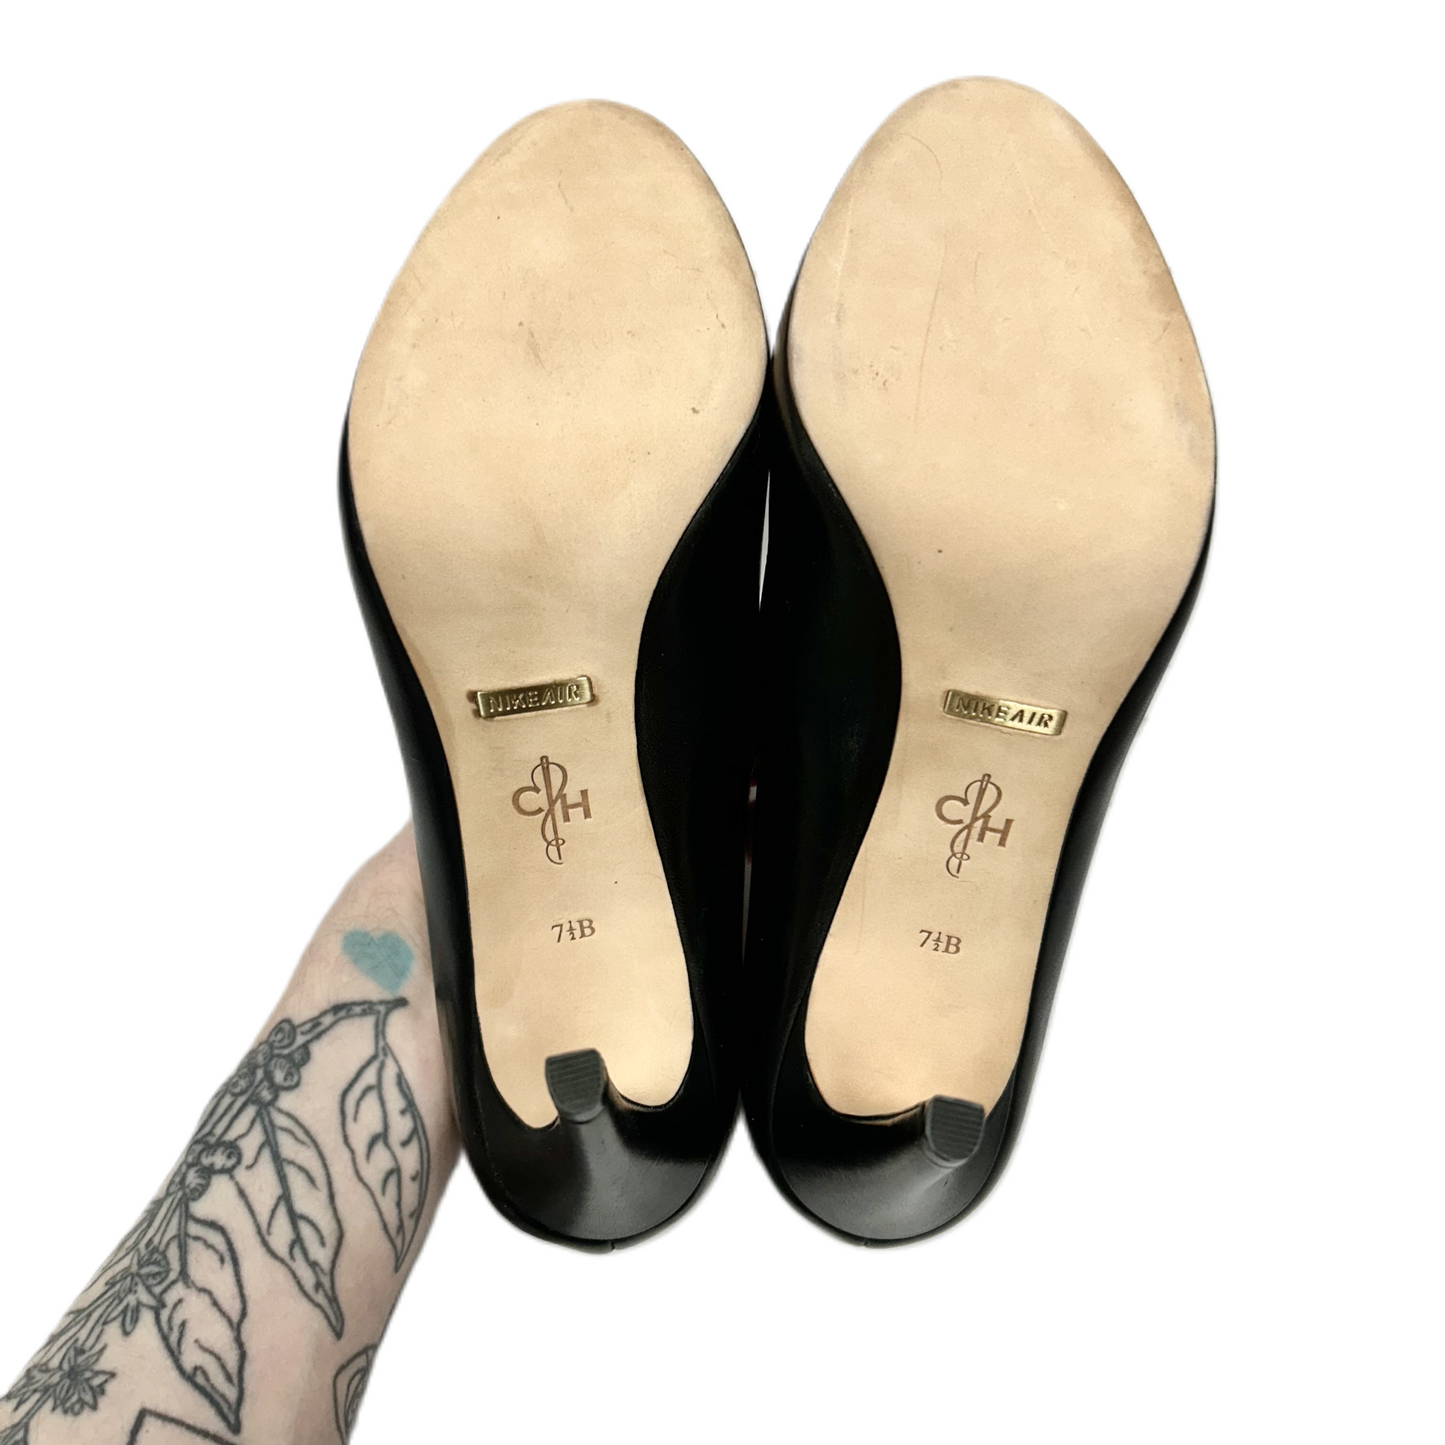 Sandals Heels Wedge By Cole-haan  Size: 7.5